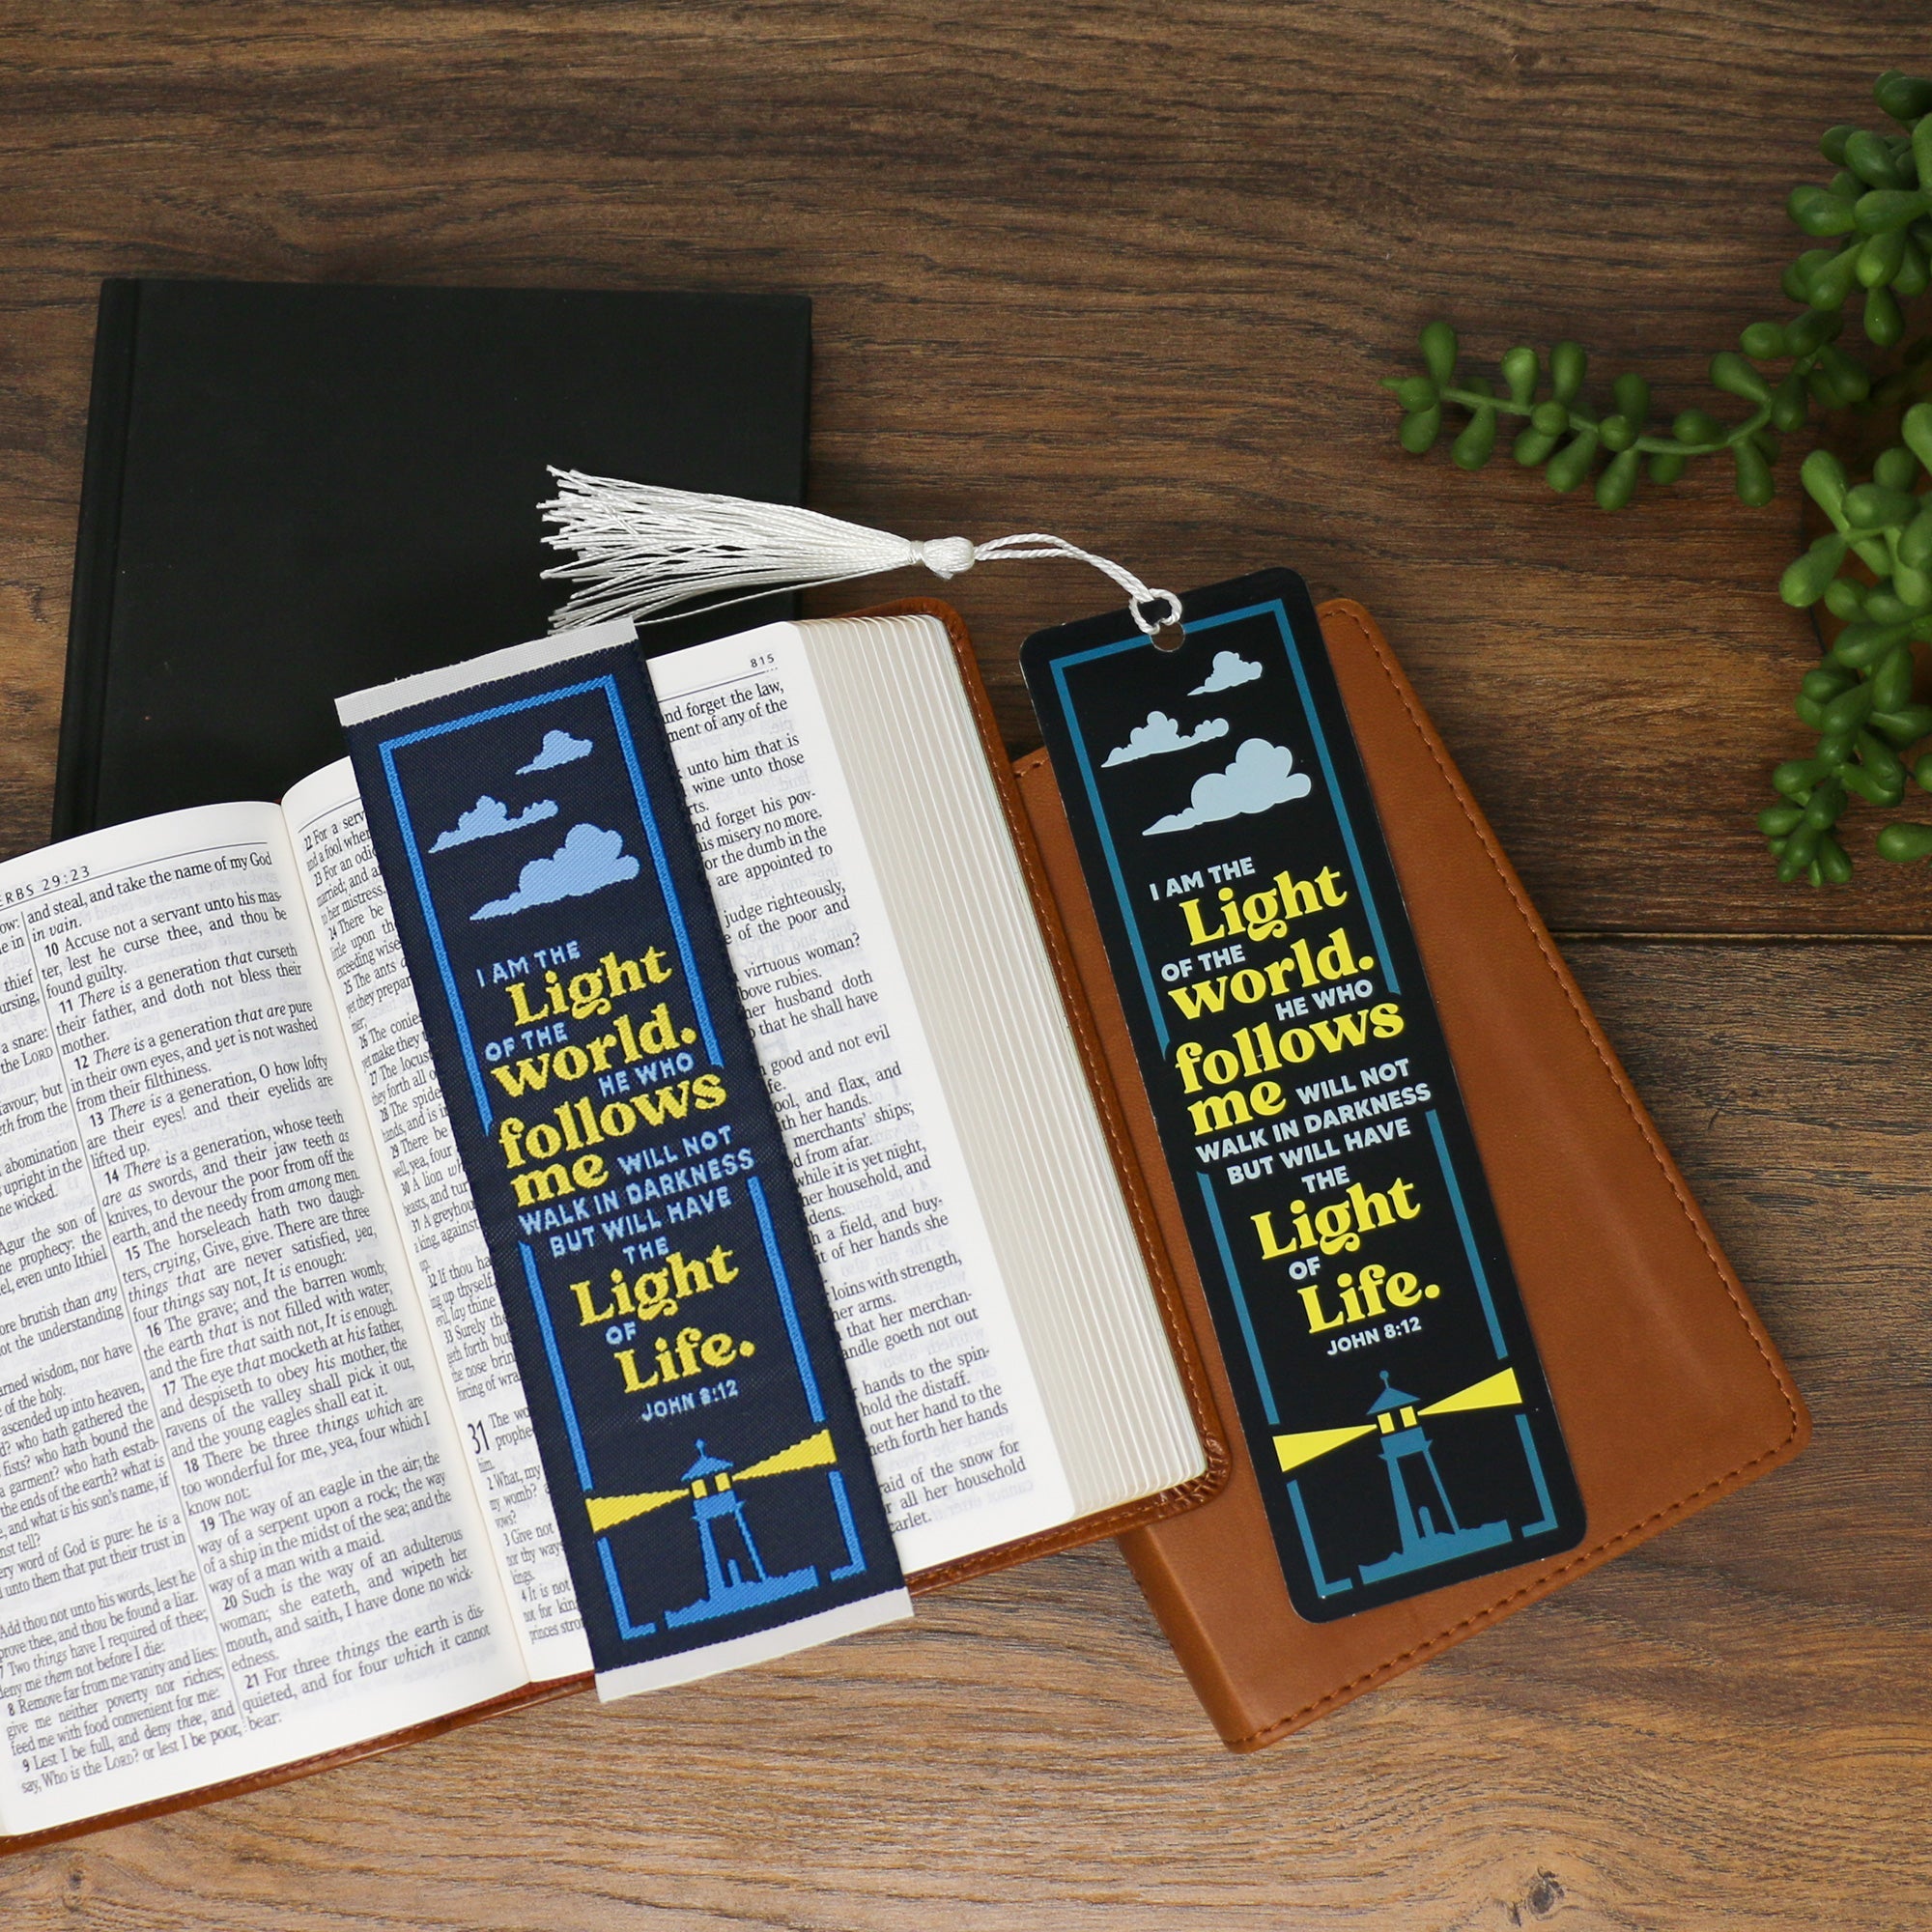 I am the Light of the World – John 8:12 Woven and Tasseled Bookmark Set